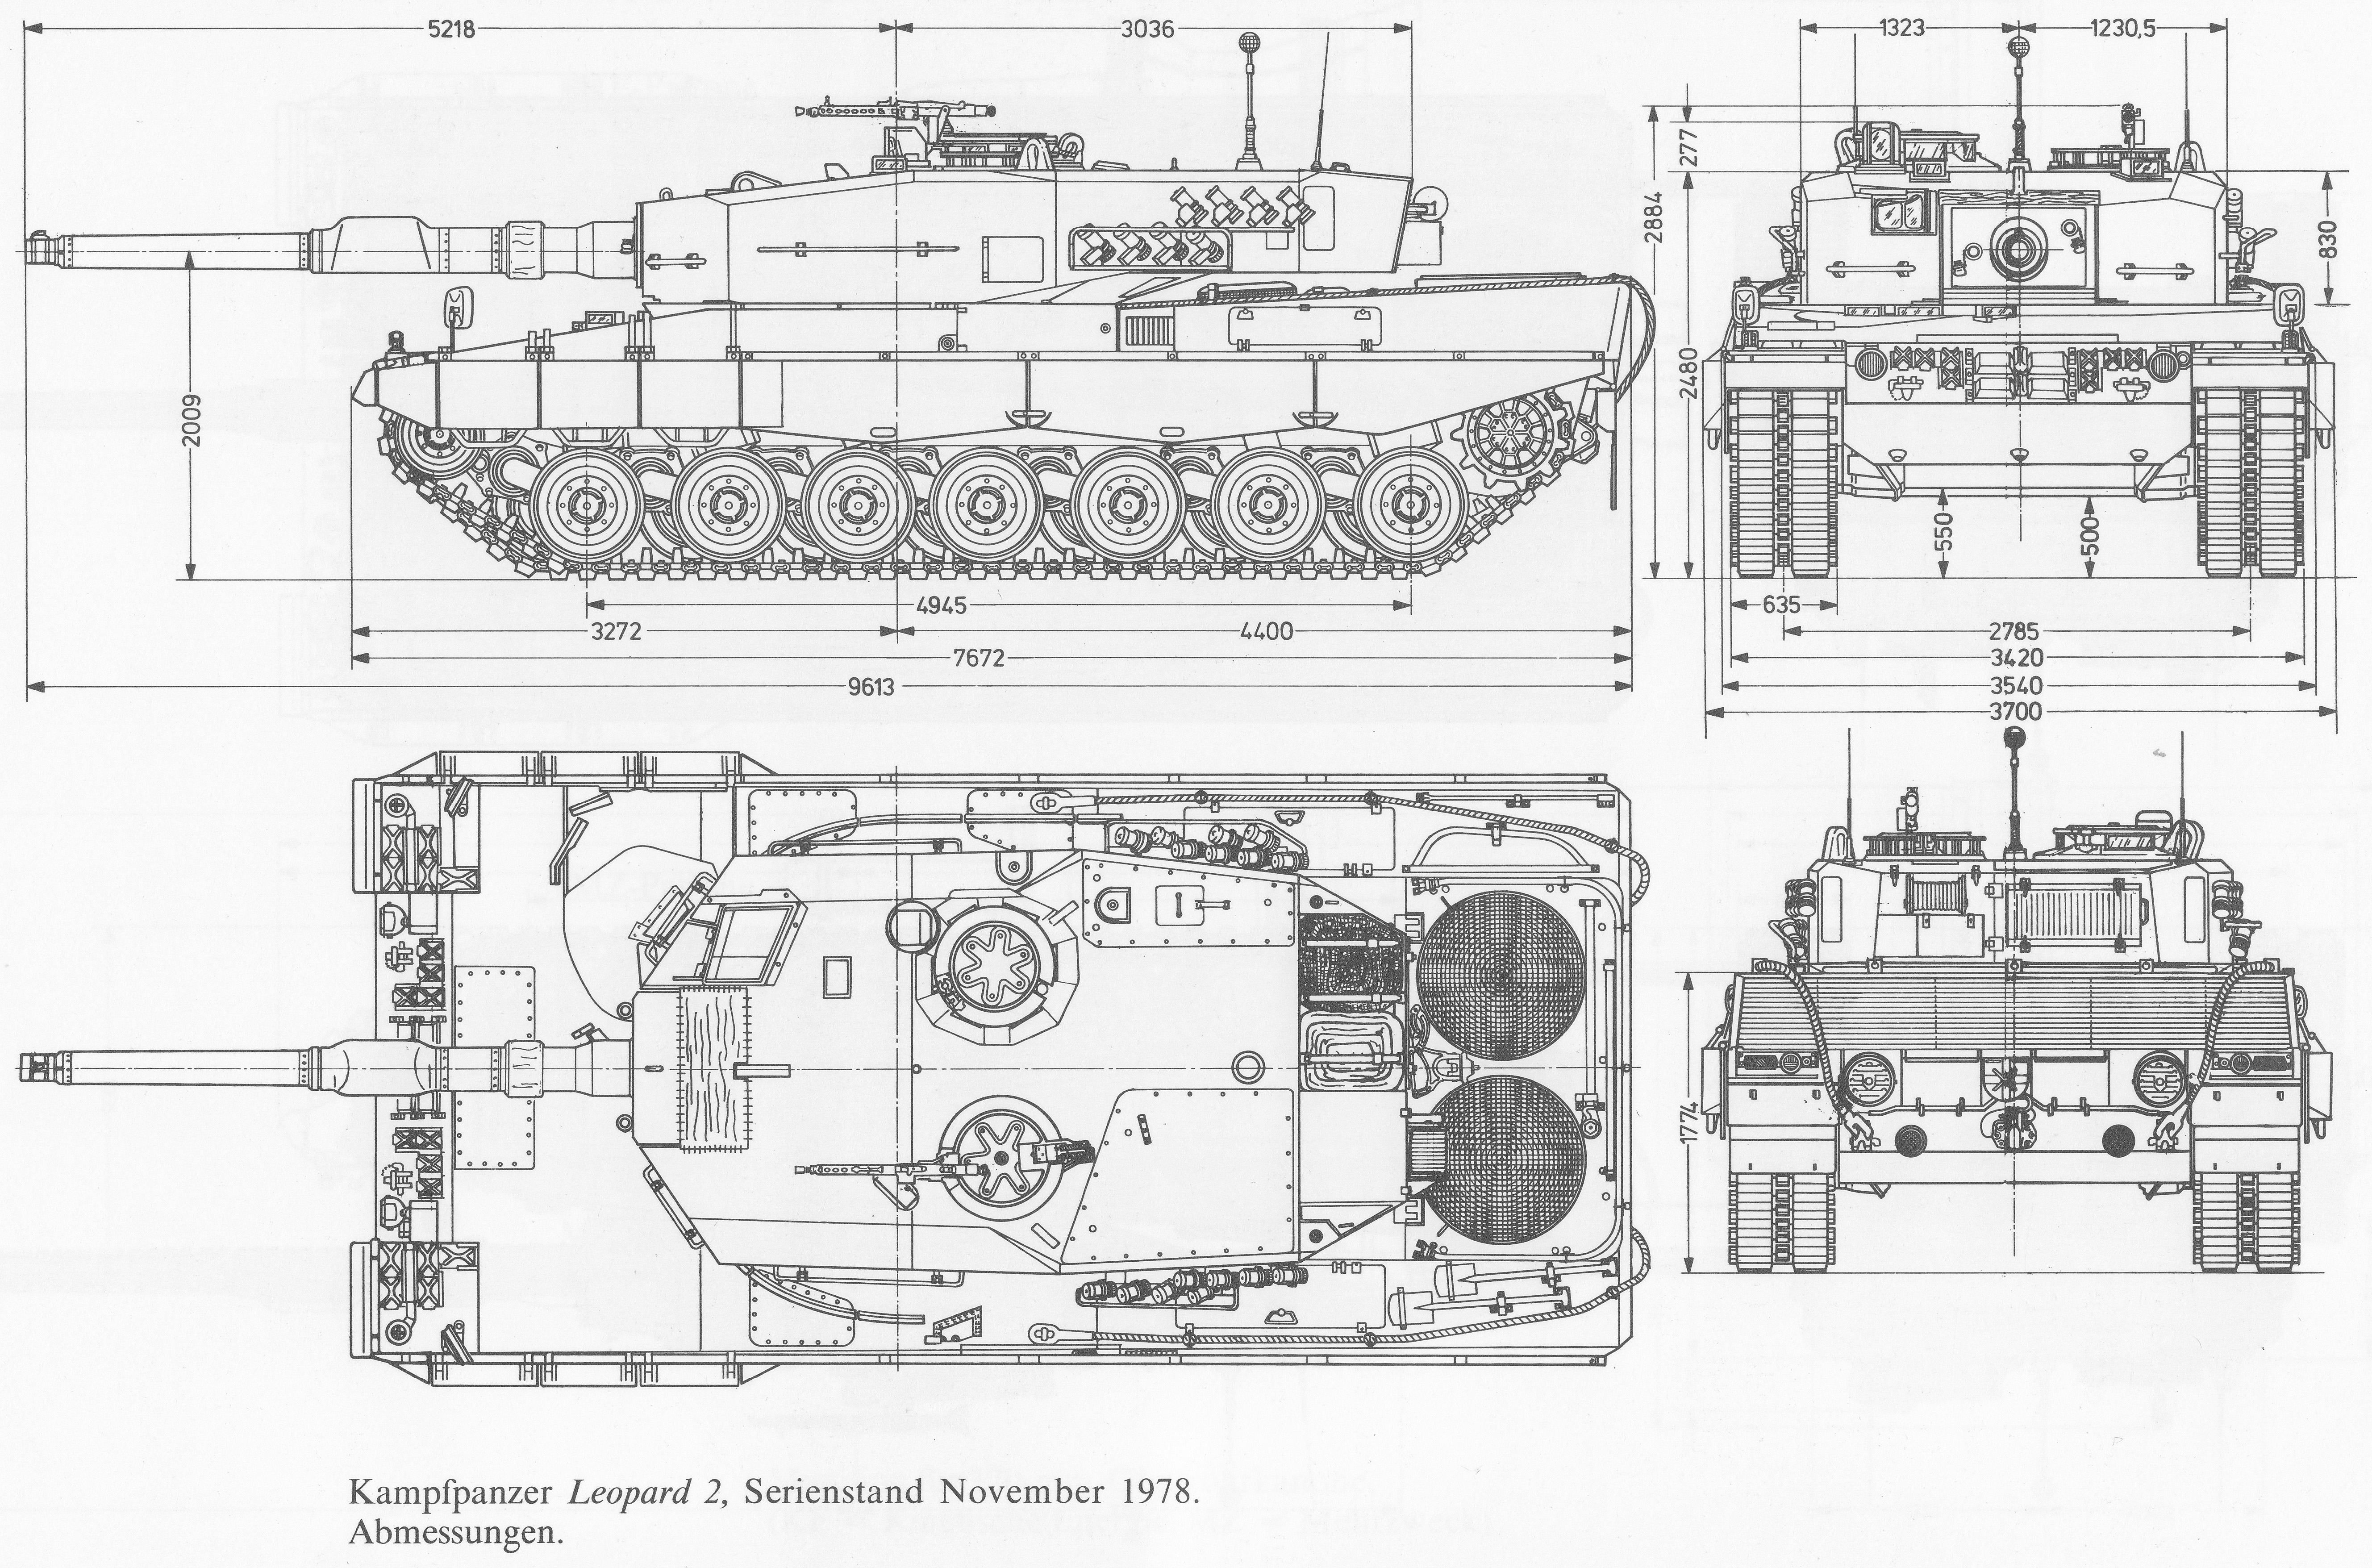 Kampfpanzer-Leopard-2-Serienstand-November-1978-Abmessungen.jpg